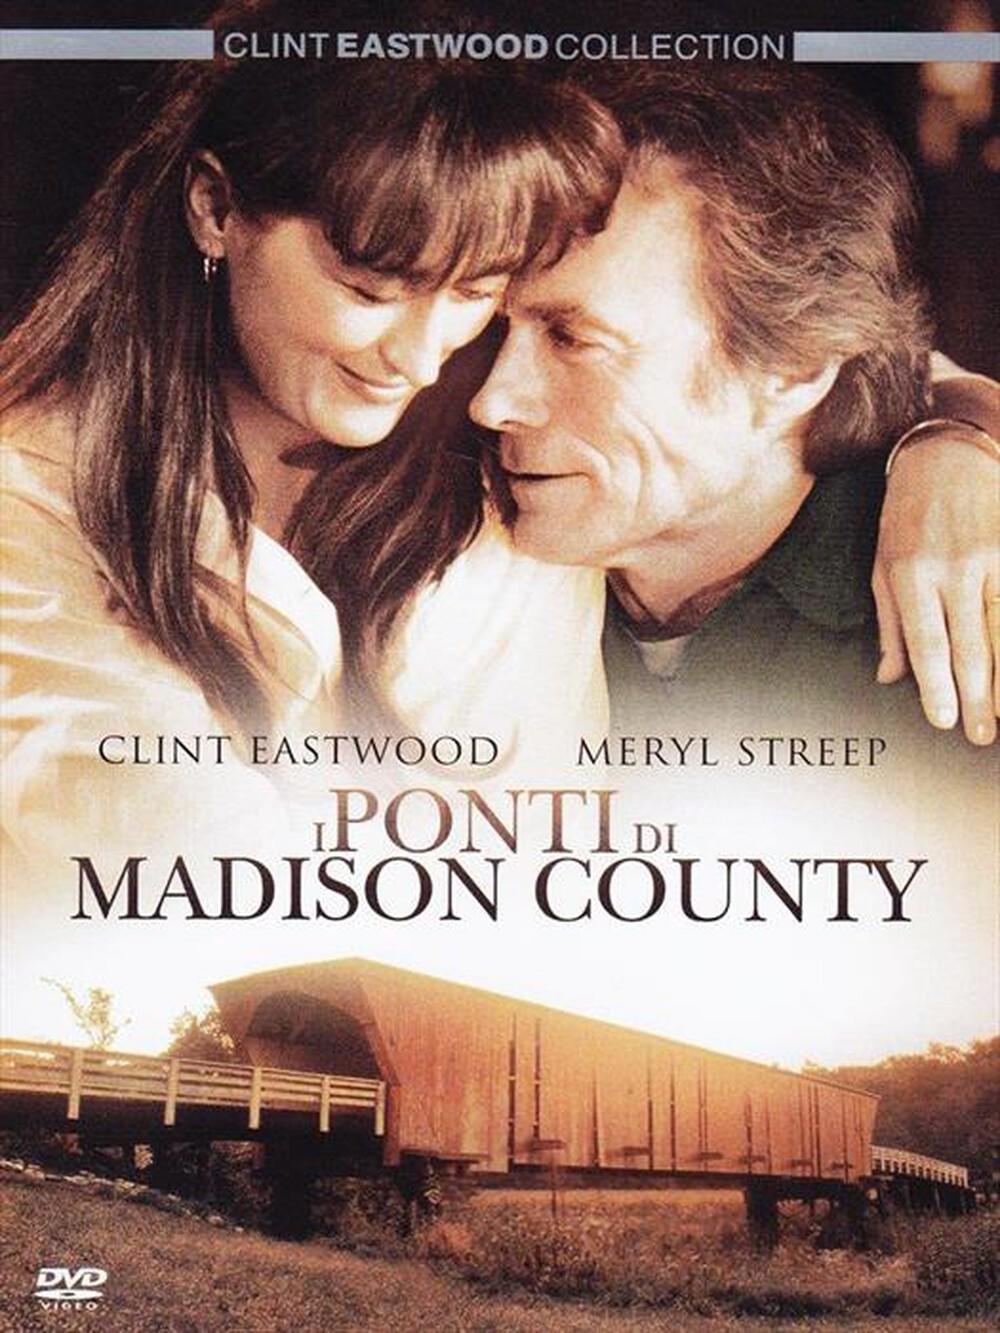 "WARNER HOME VIDEO - Ponti Di Madison County (I) (Deluxe Edition)"